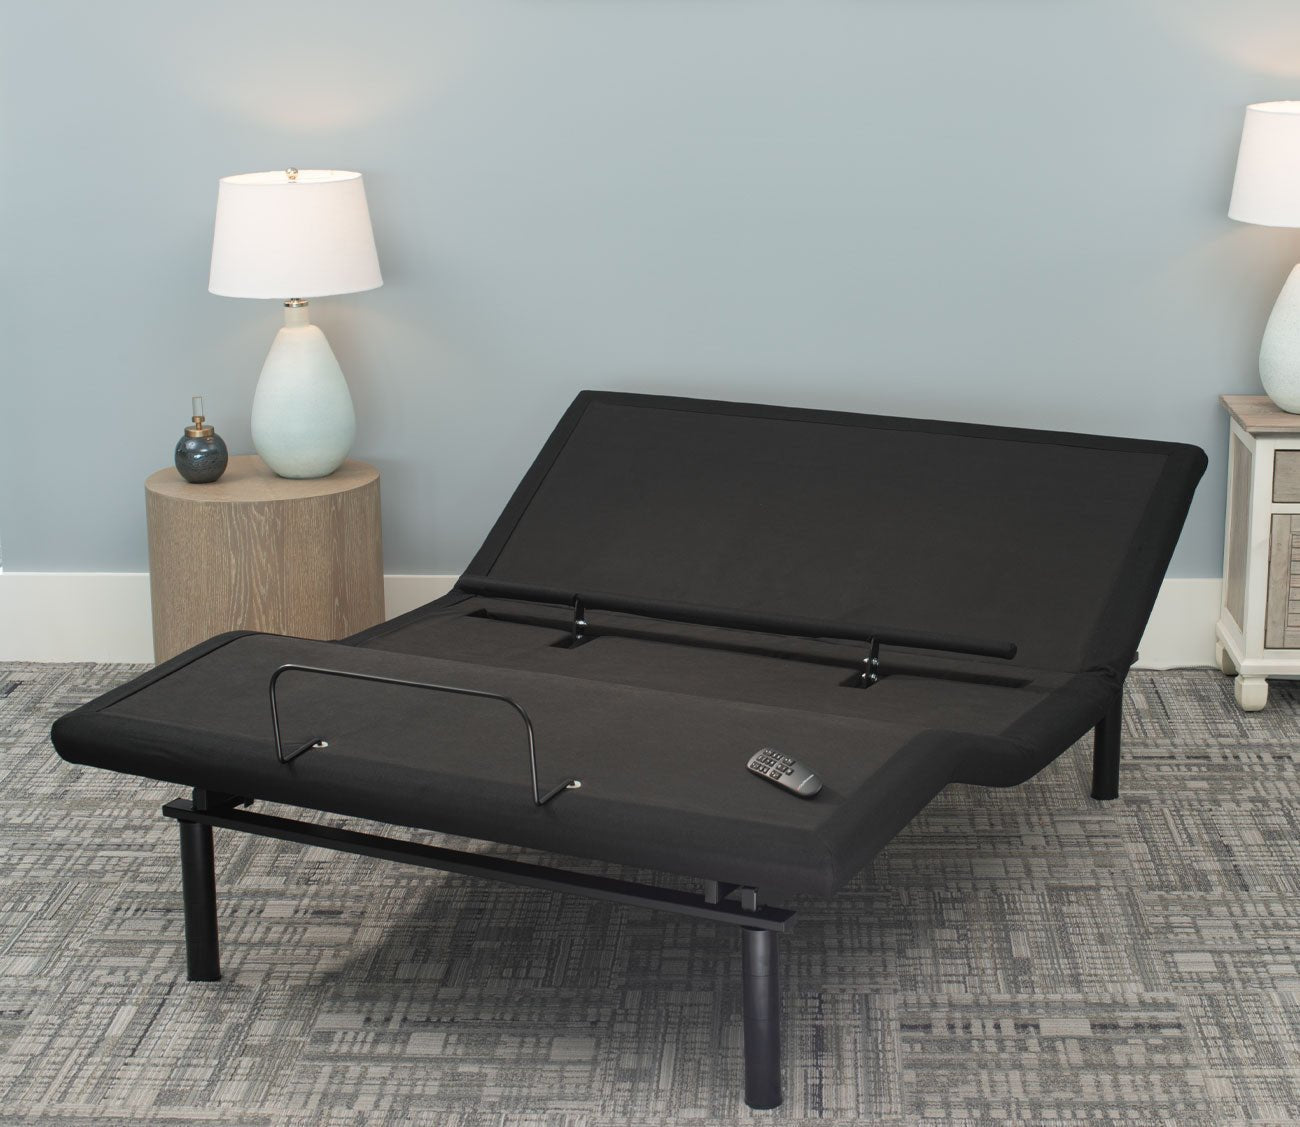 Ergomotion 4.0 Adjustable Bed Base - FLOOR SAMPLE by City Mattress